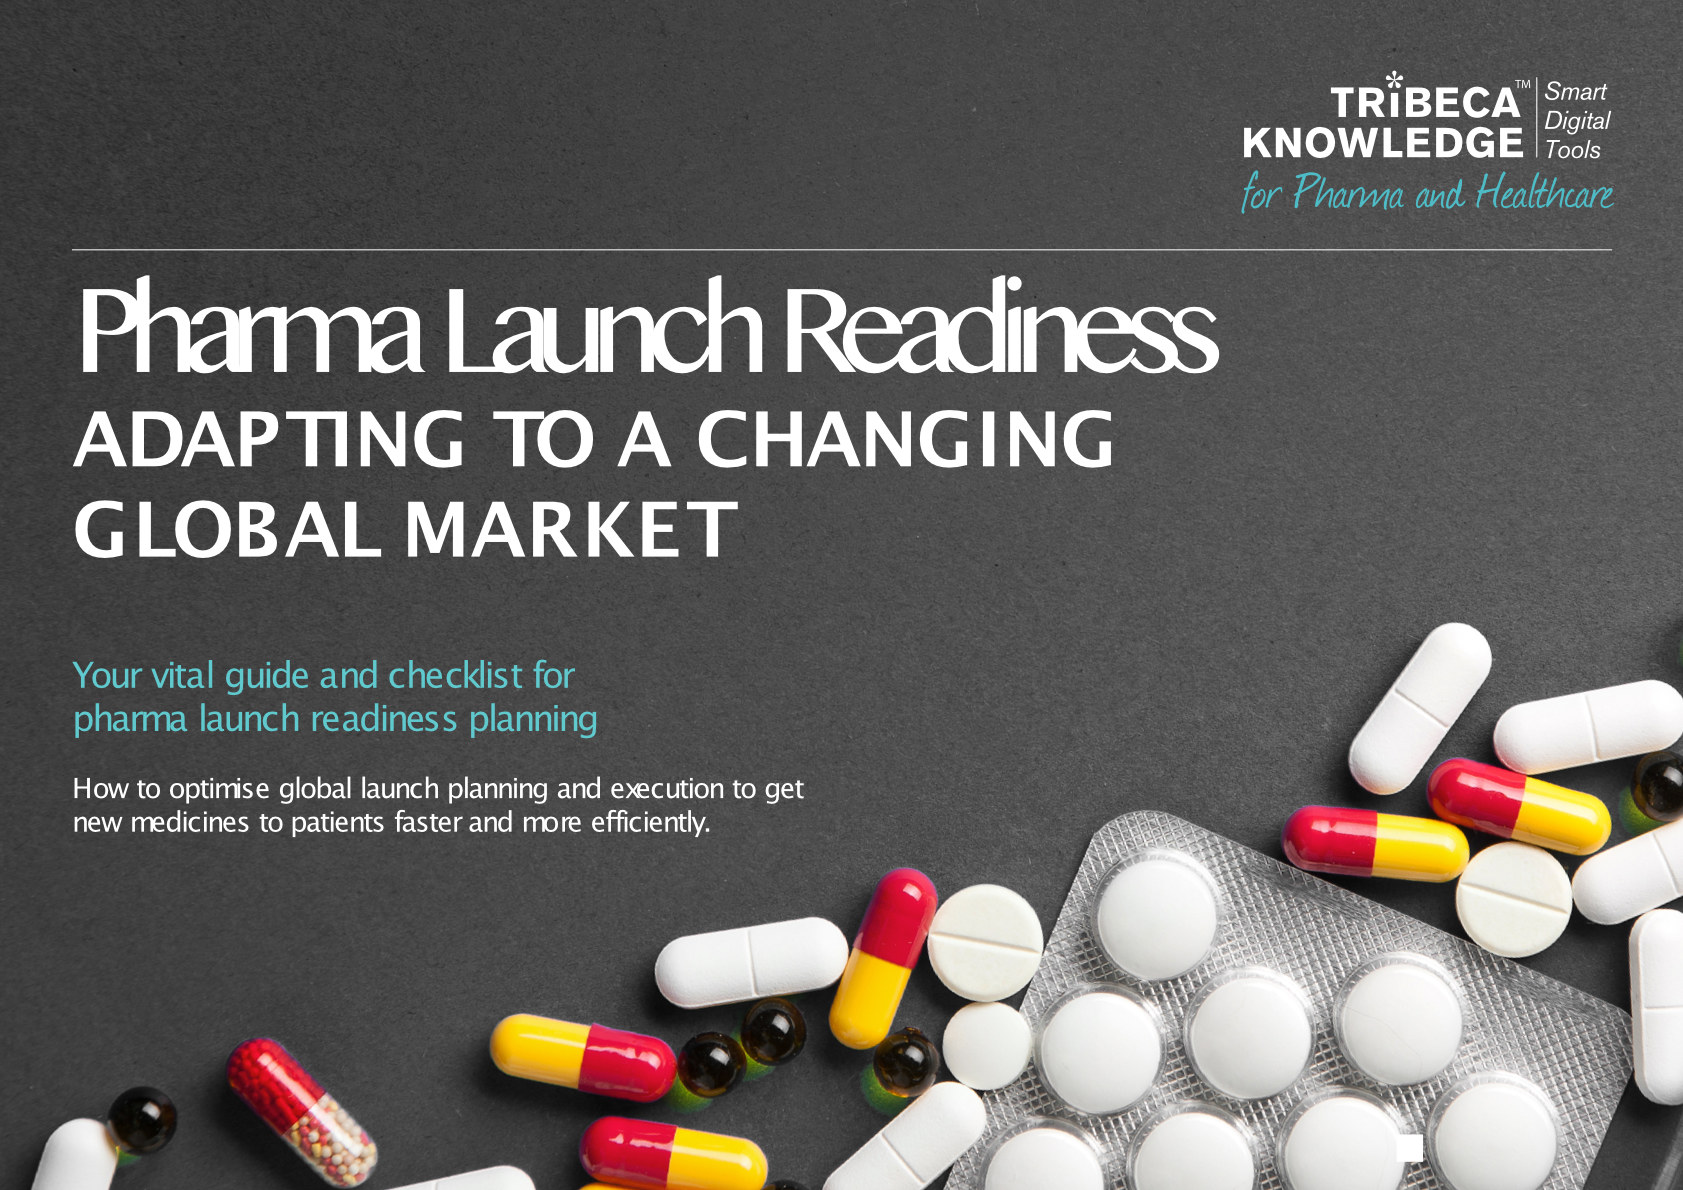 Pharma launch readiness checklist guide